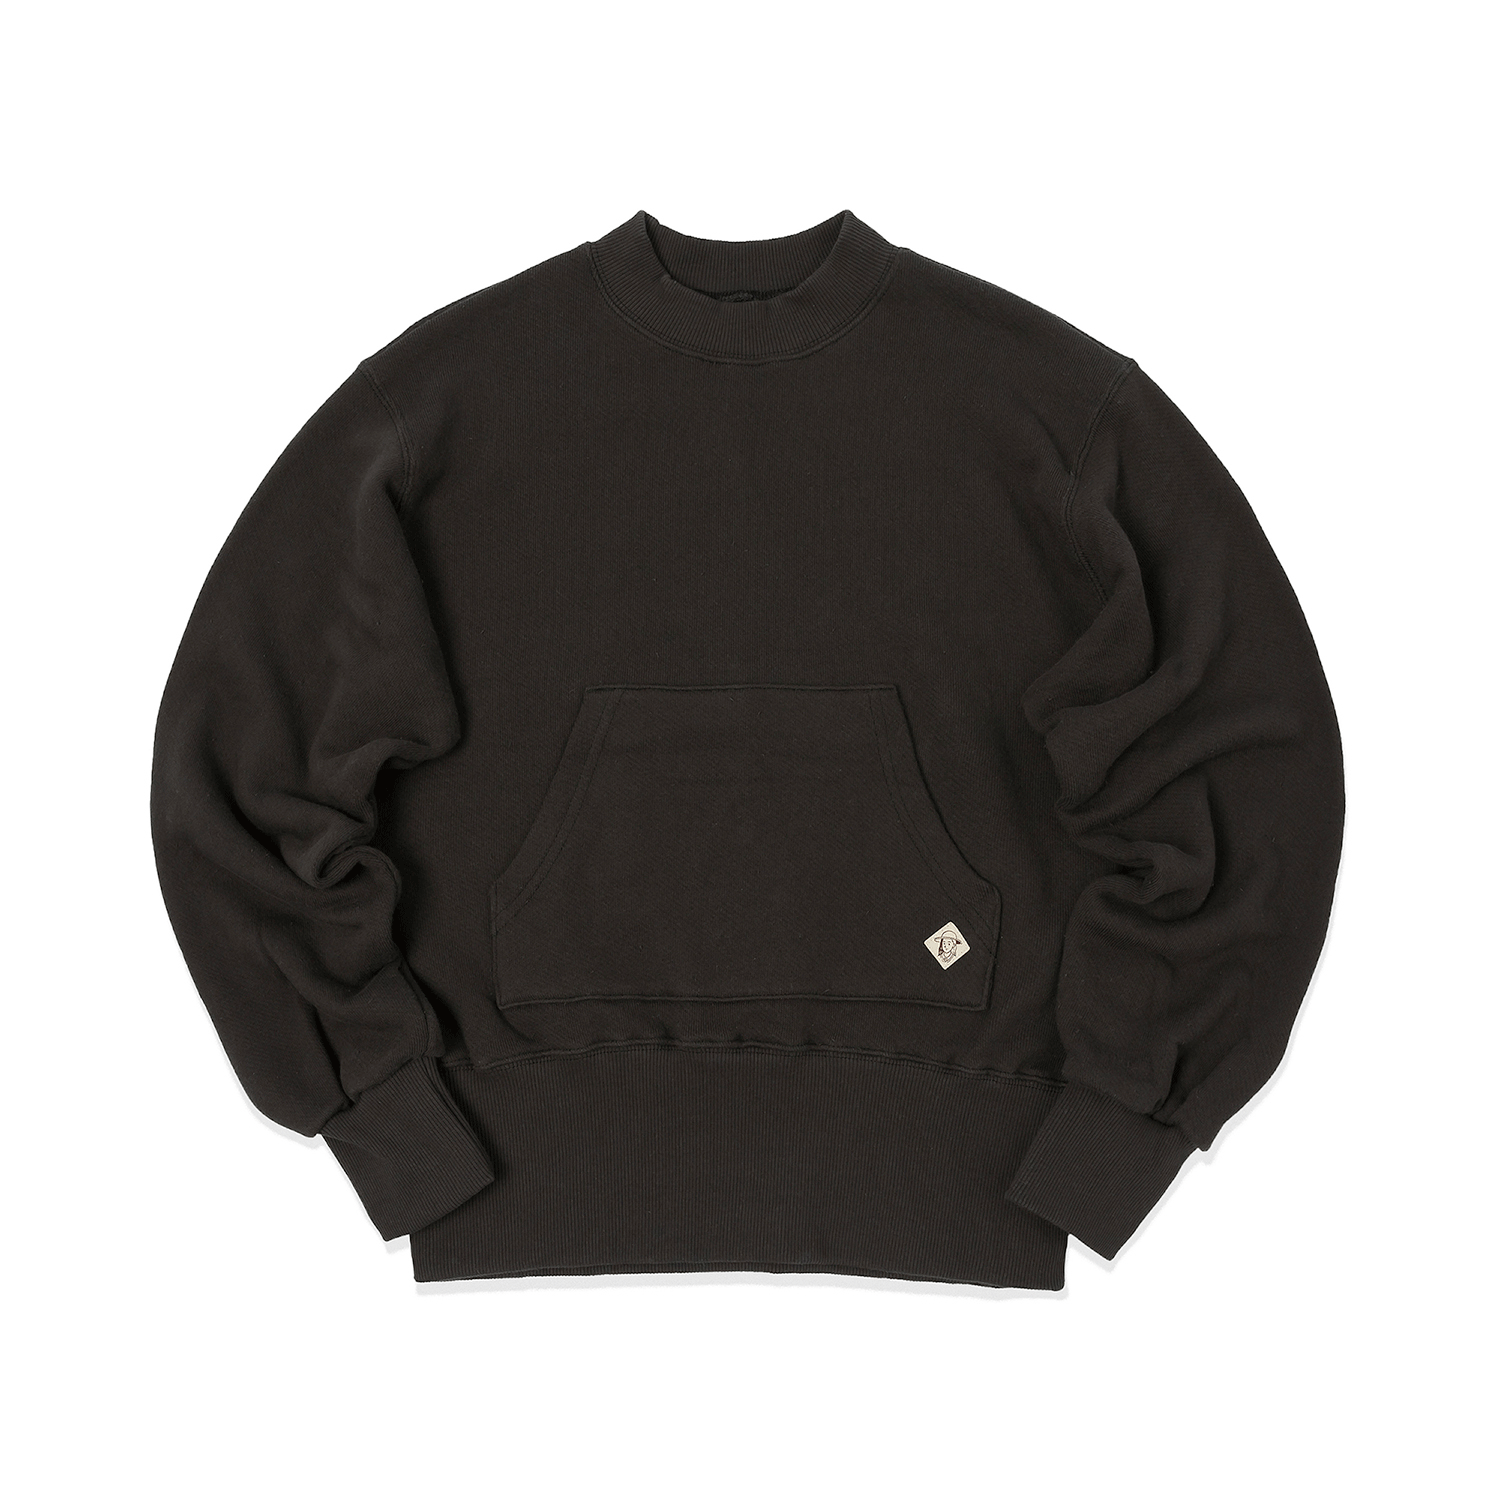 Soft Cotton Sweatshirt - Charcoal